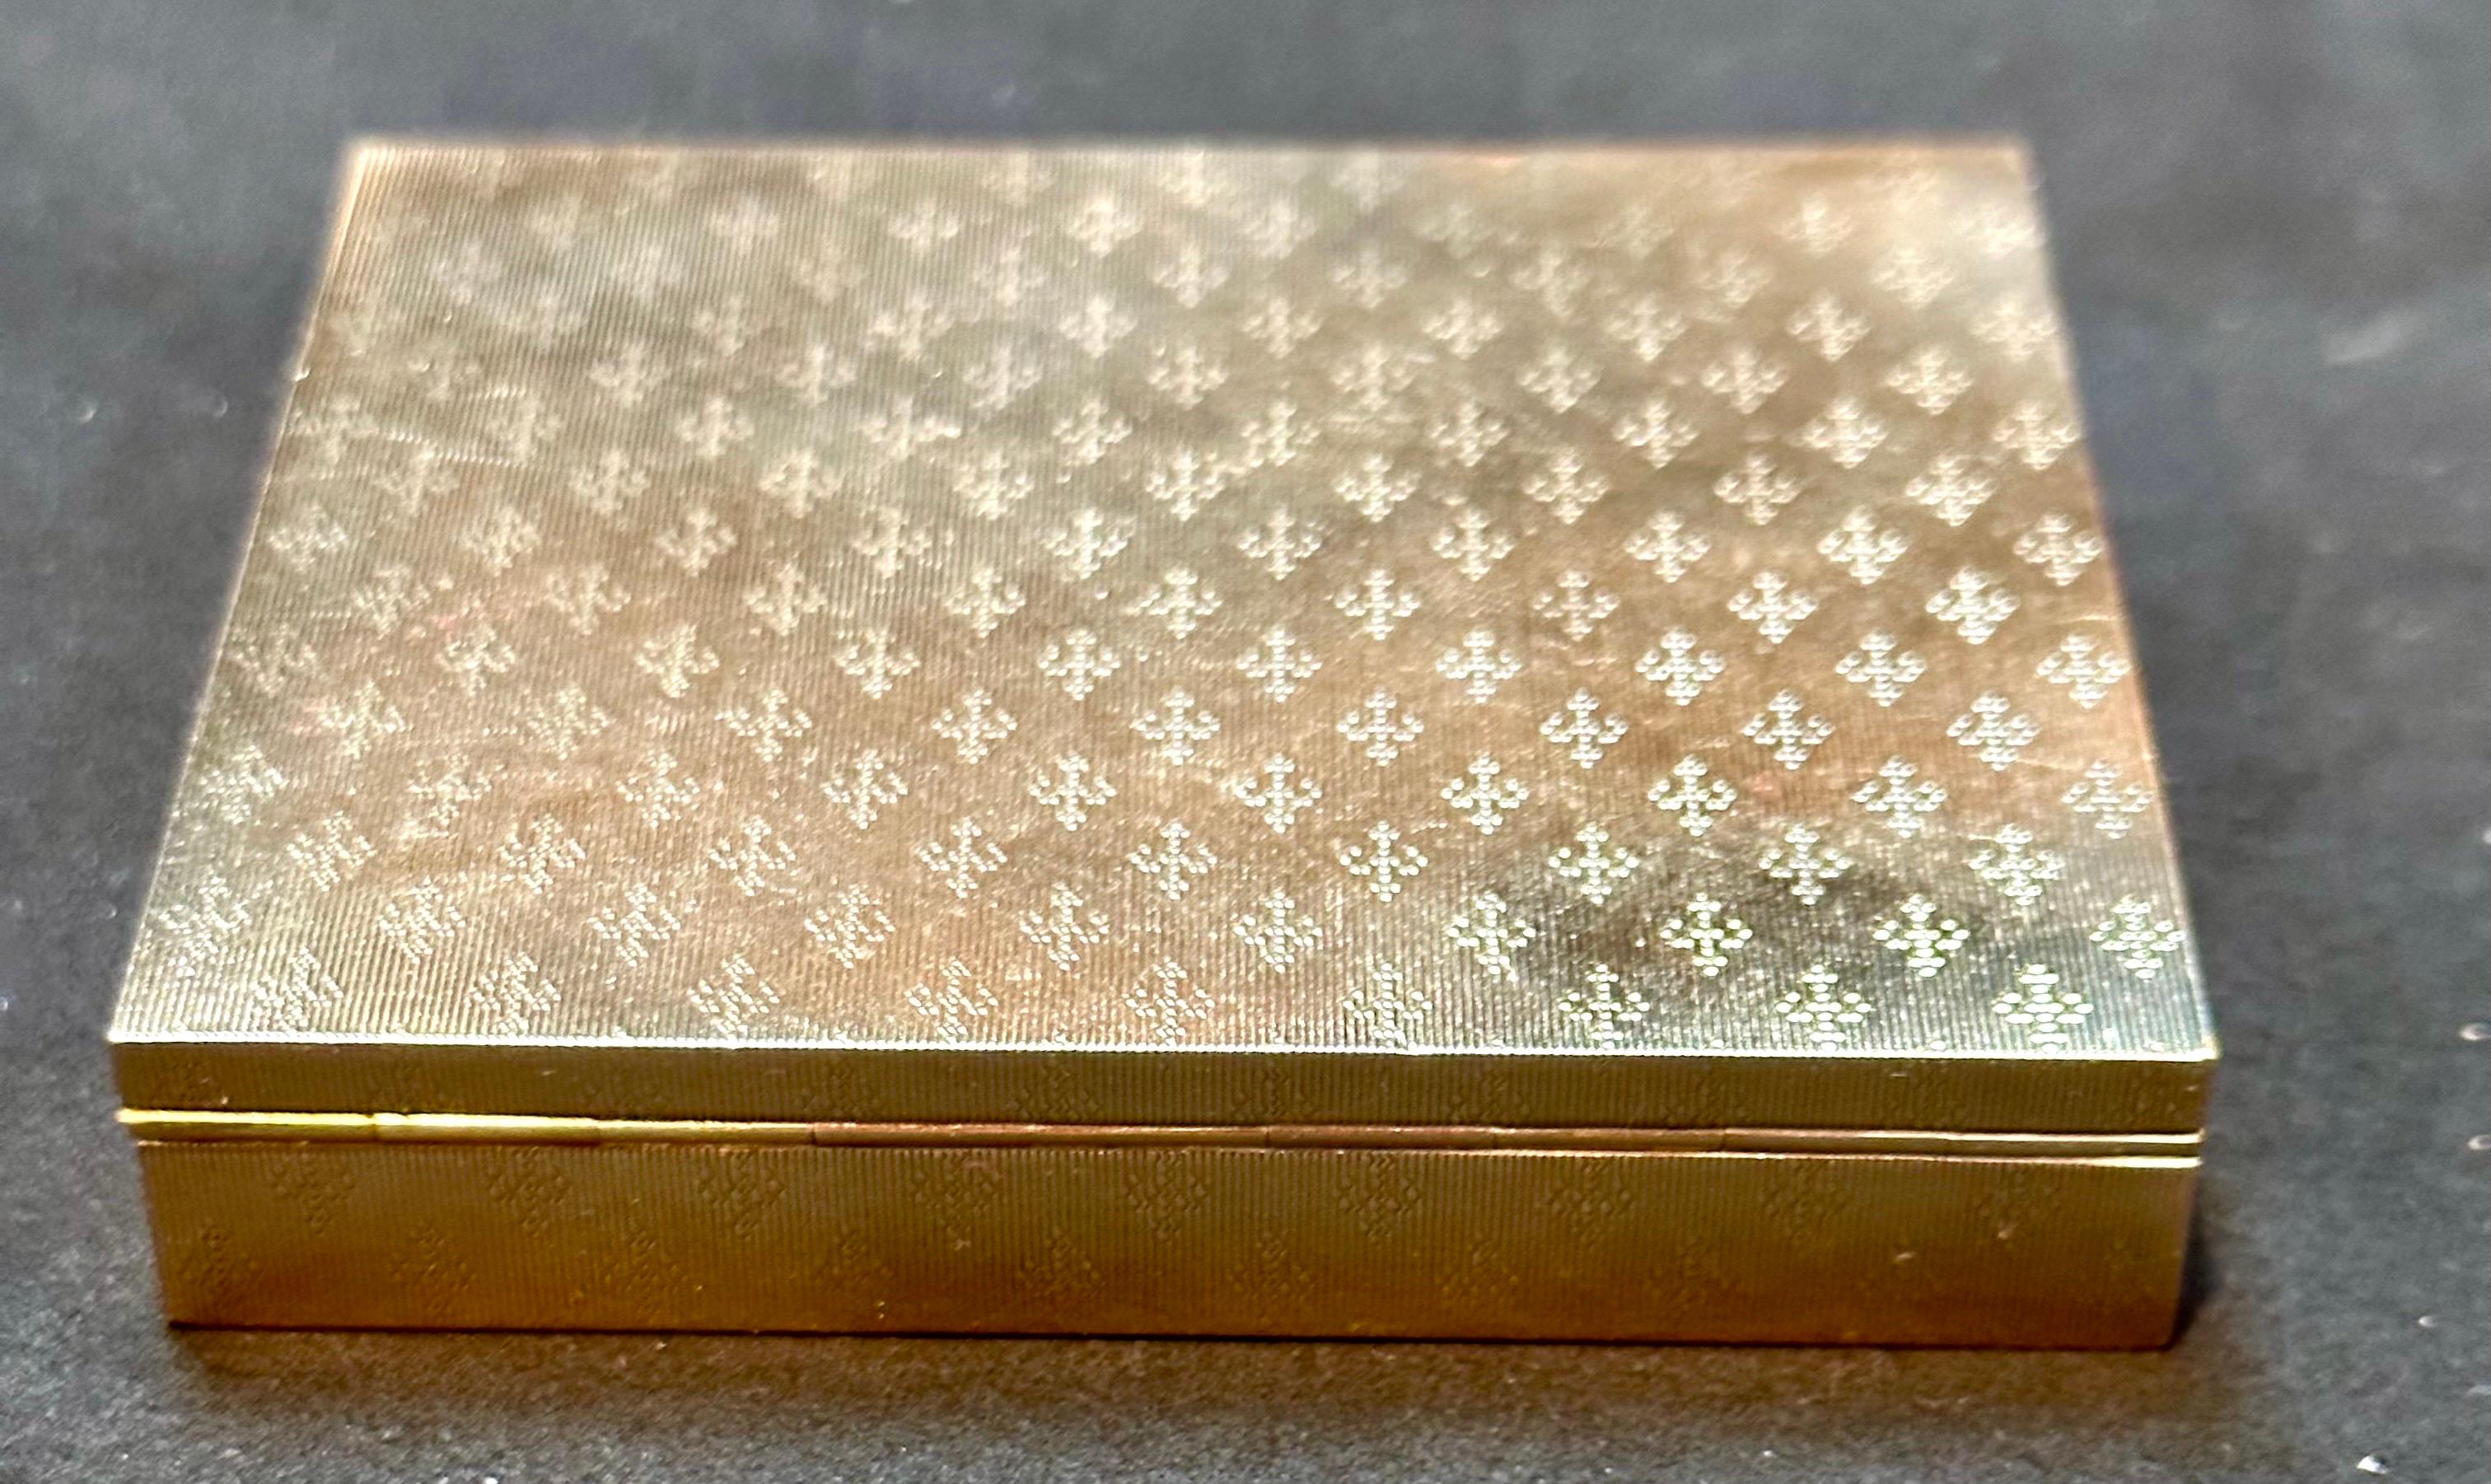 Cartier Gold Compact Powder Box 14 Karat Gold Make-Up Compact 114 Gm For Sale 1